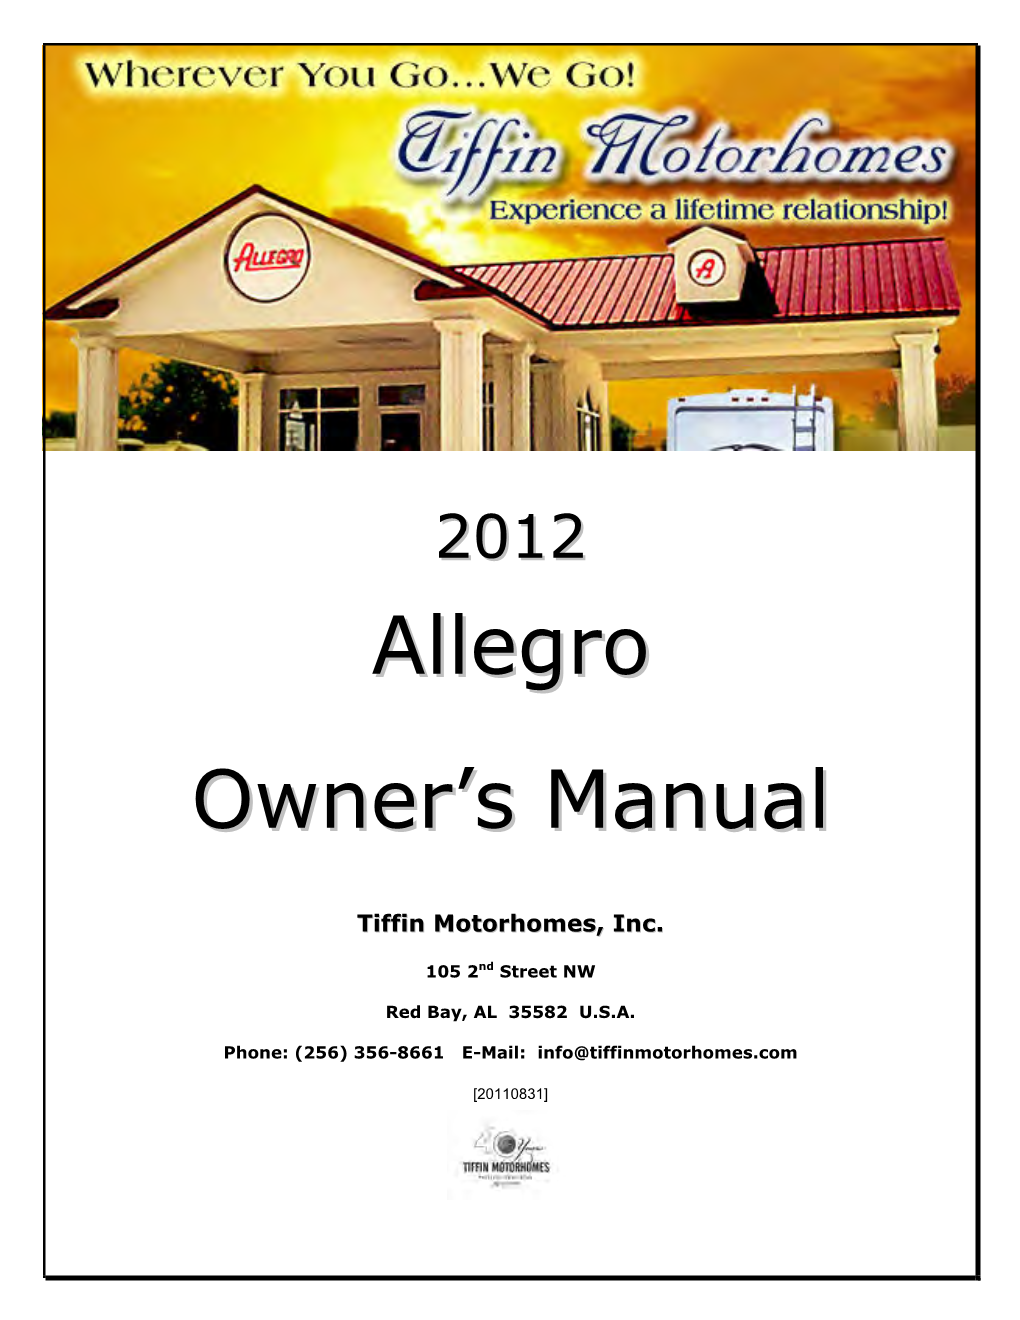 Allegro Owner's Manual